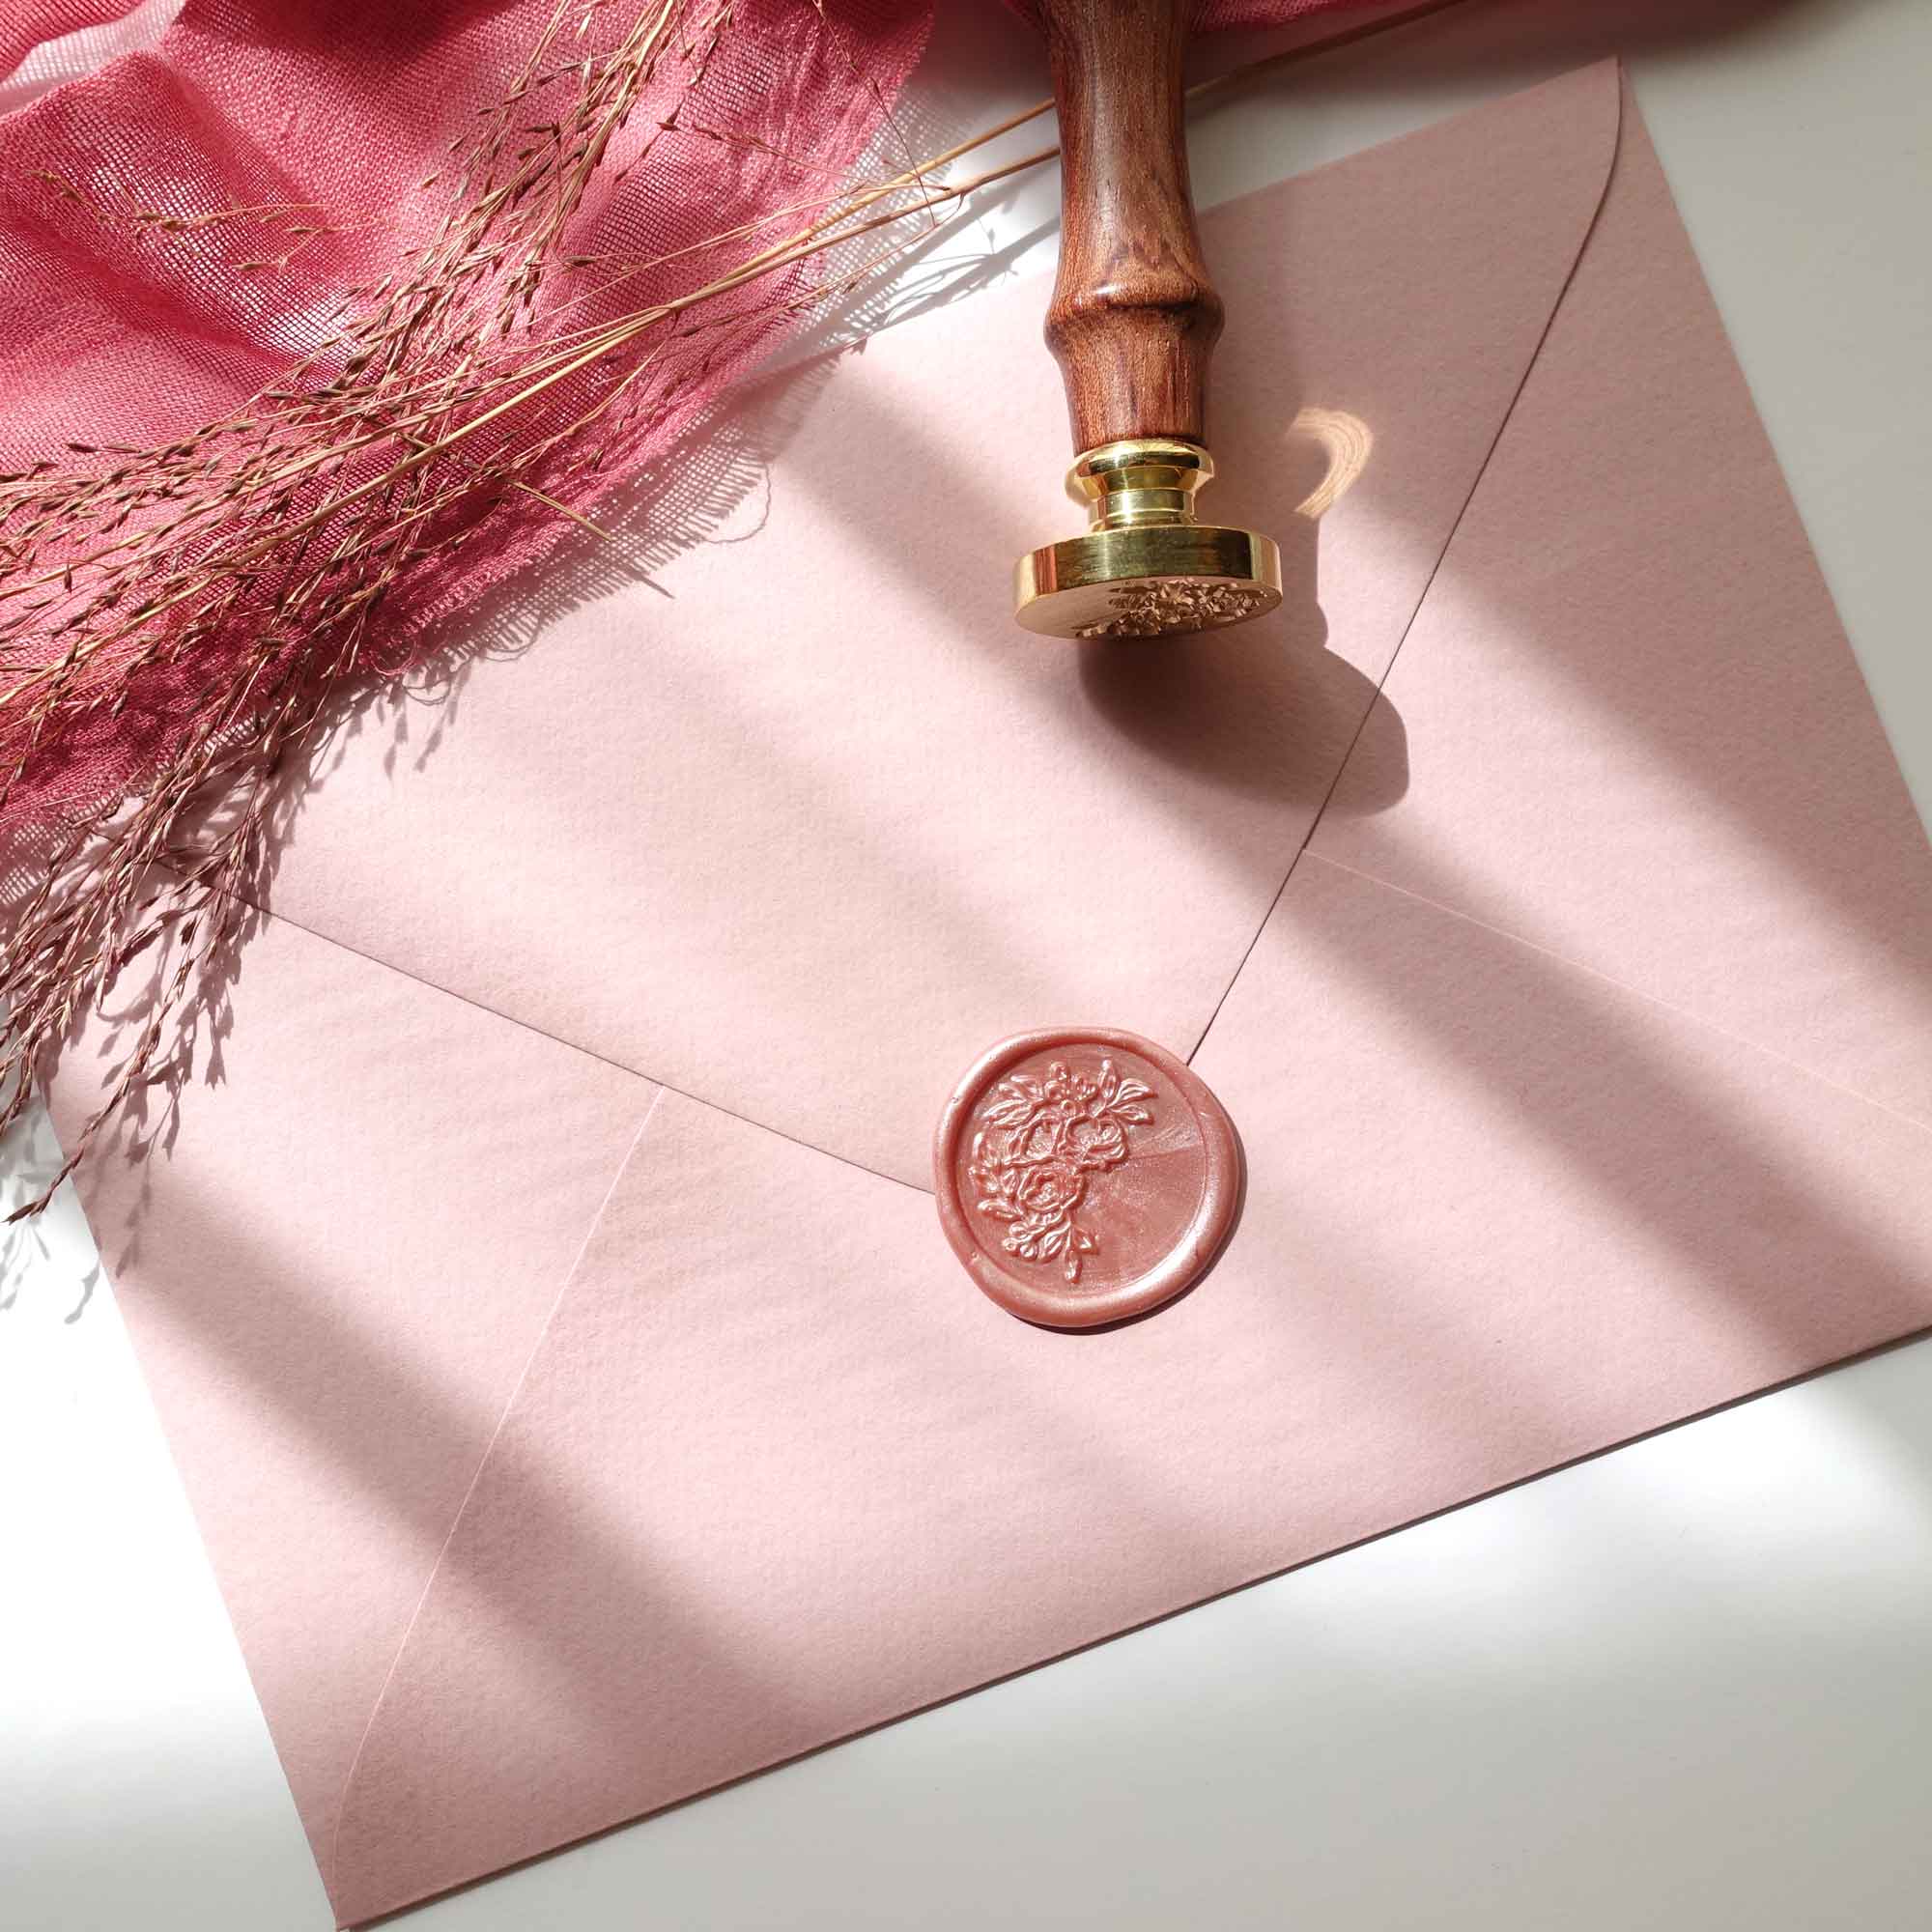 Dusty rose half garland wax seal on wedding invitations envelope